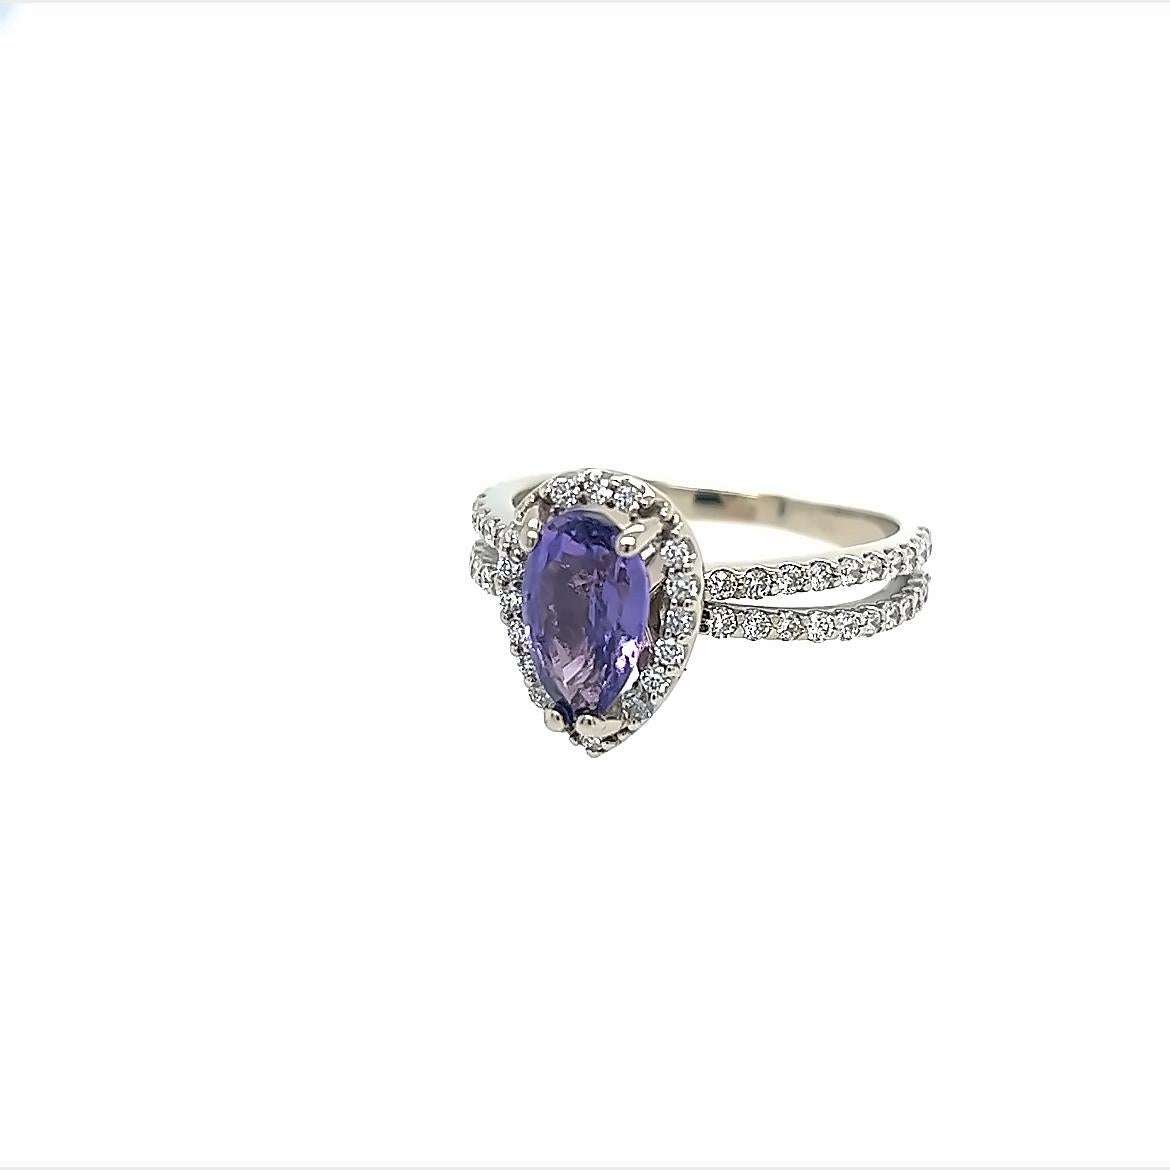 Pear Cut 1.54 Carat Ceylon Violet Stunning Sapphire & Diamond Ring Set in Wht 14k Gold For Sale